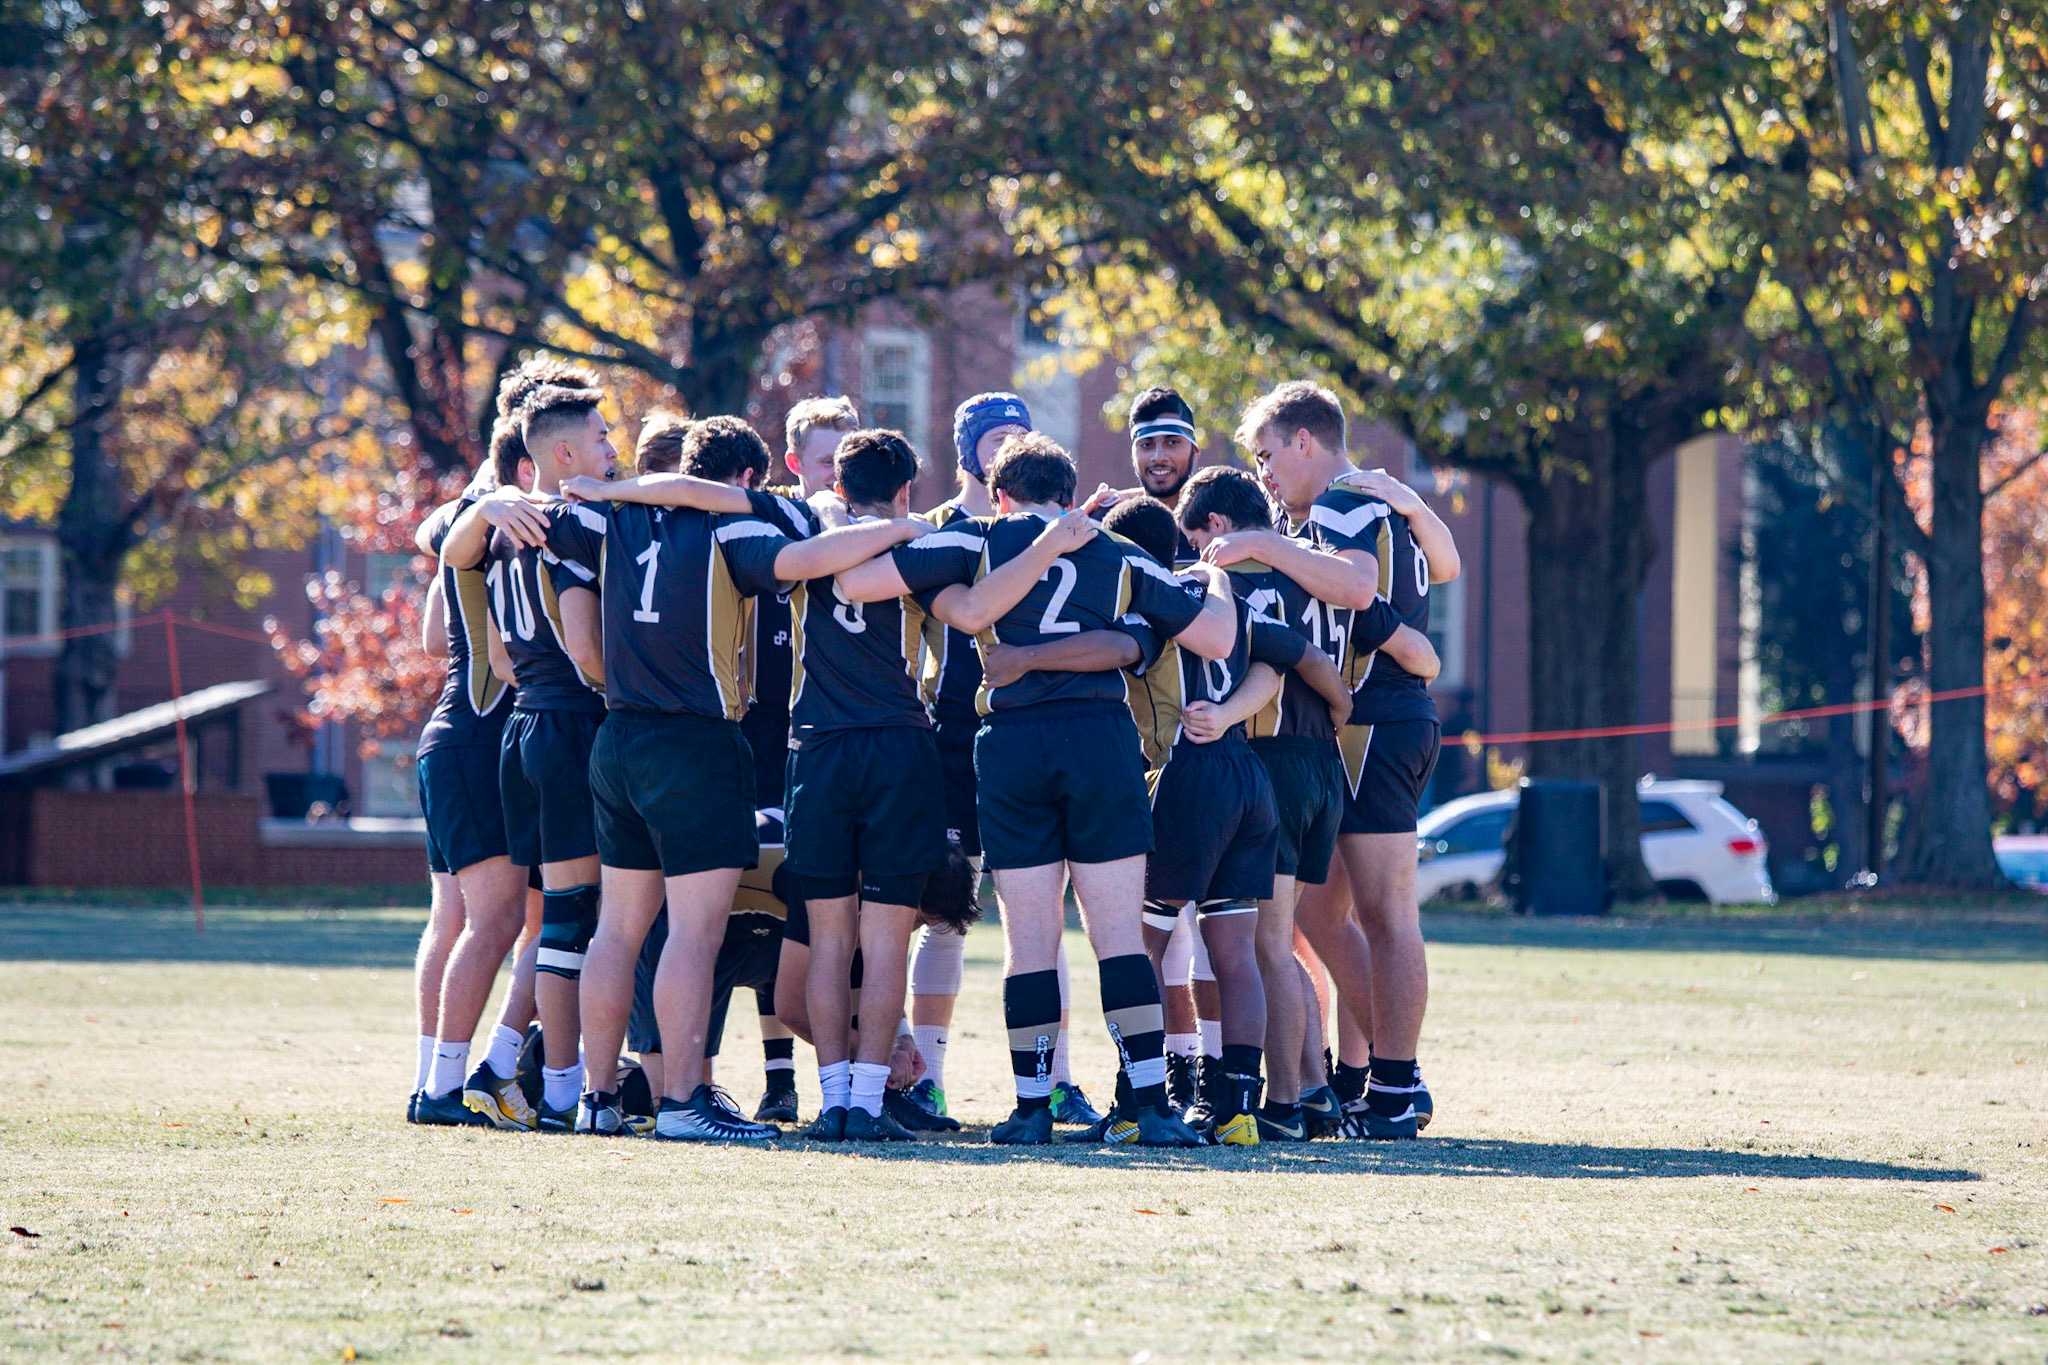 Club Rugby Team Prepares For A Strong Season